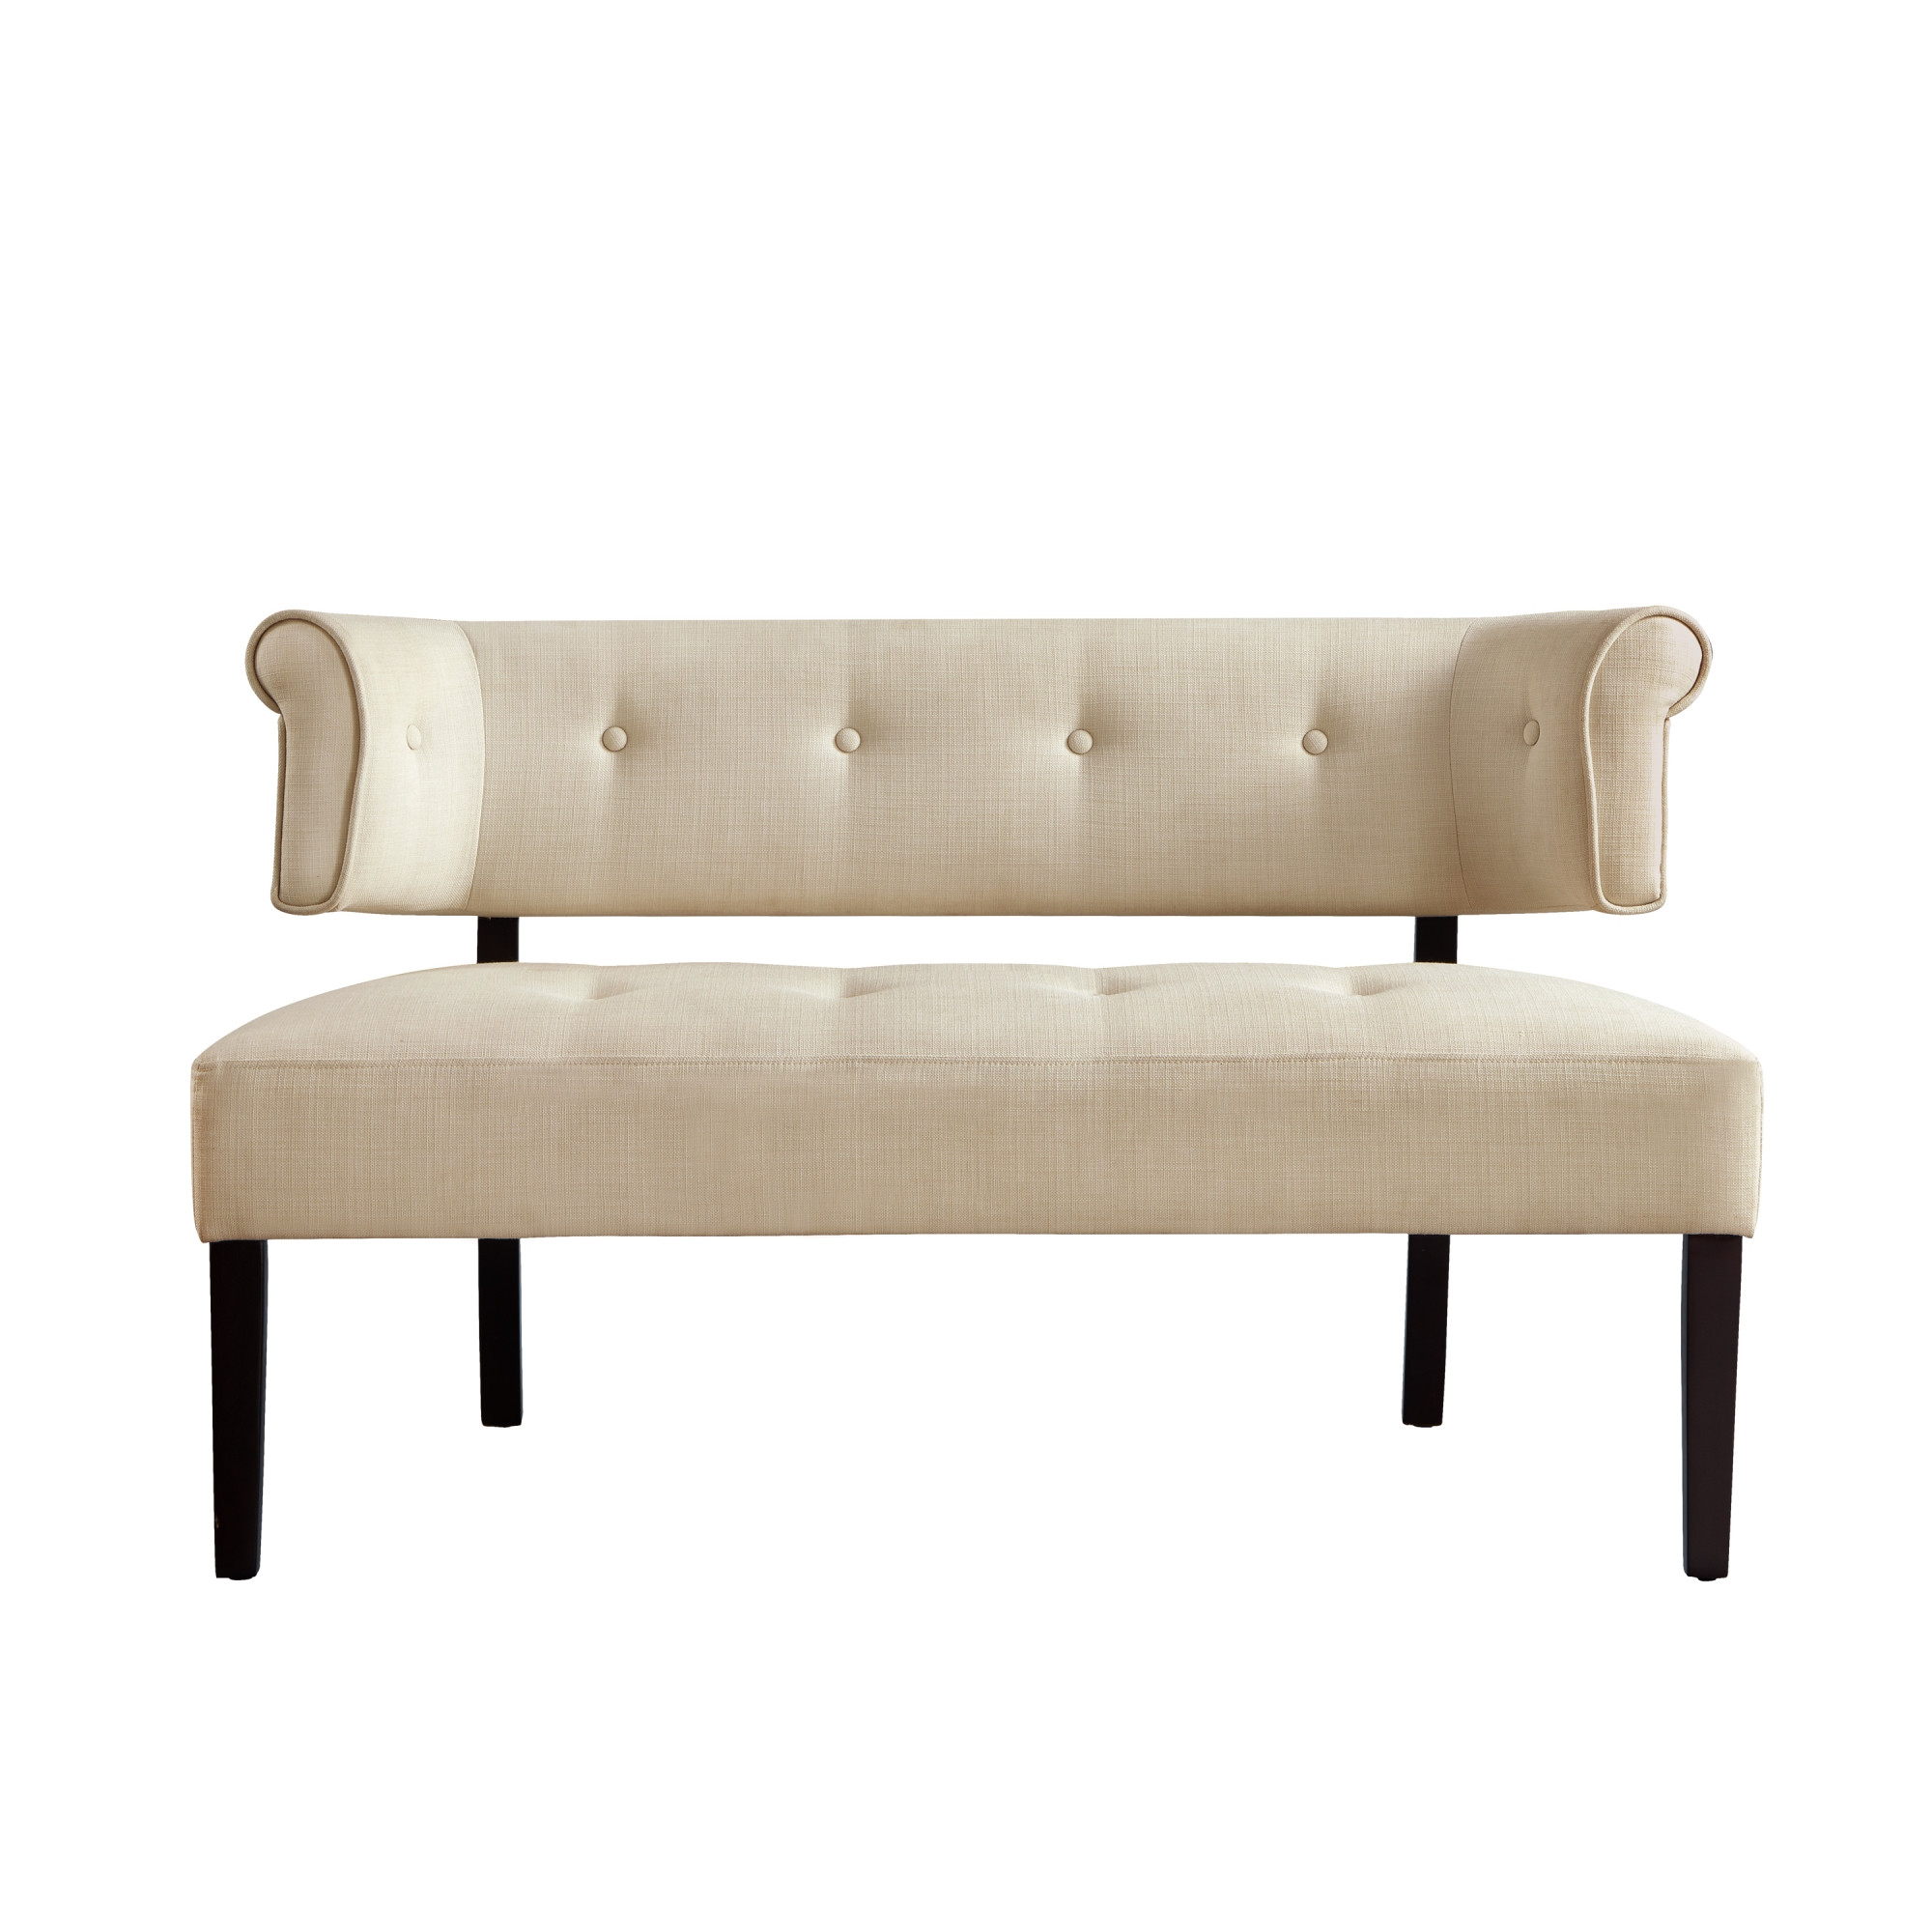 48" Beige and Dark Brown Upholstered Linen Bench-490925-1